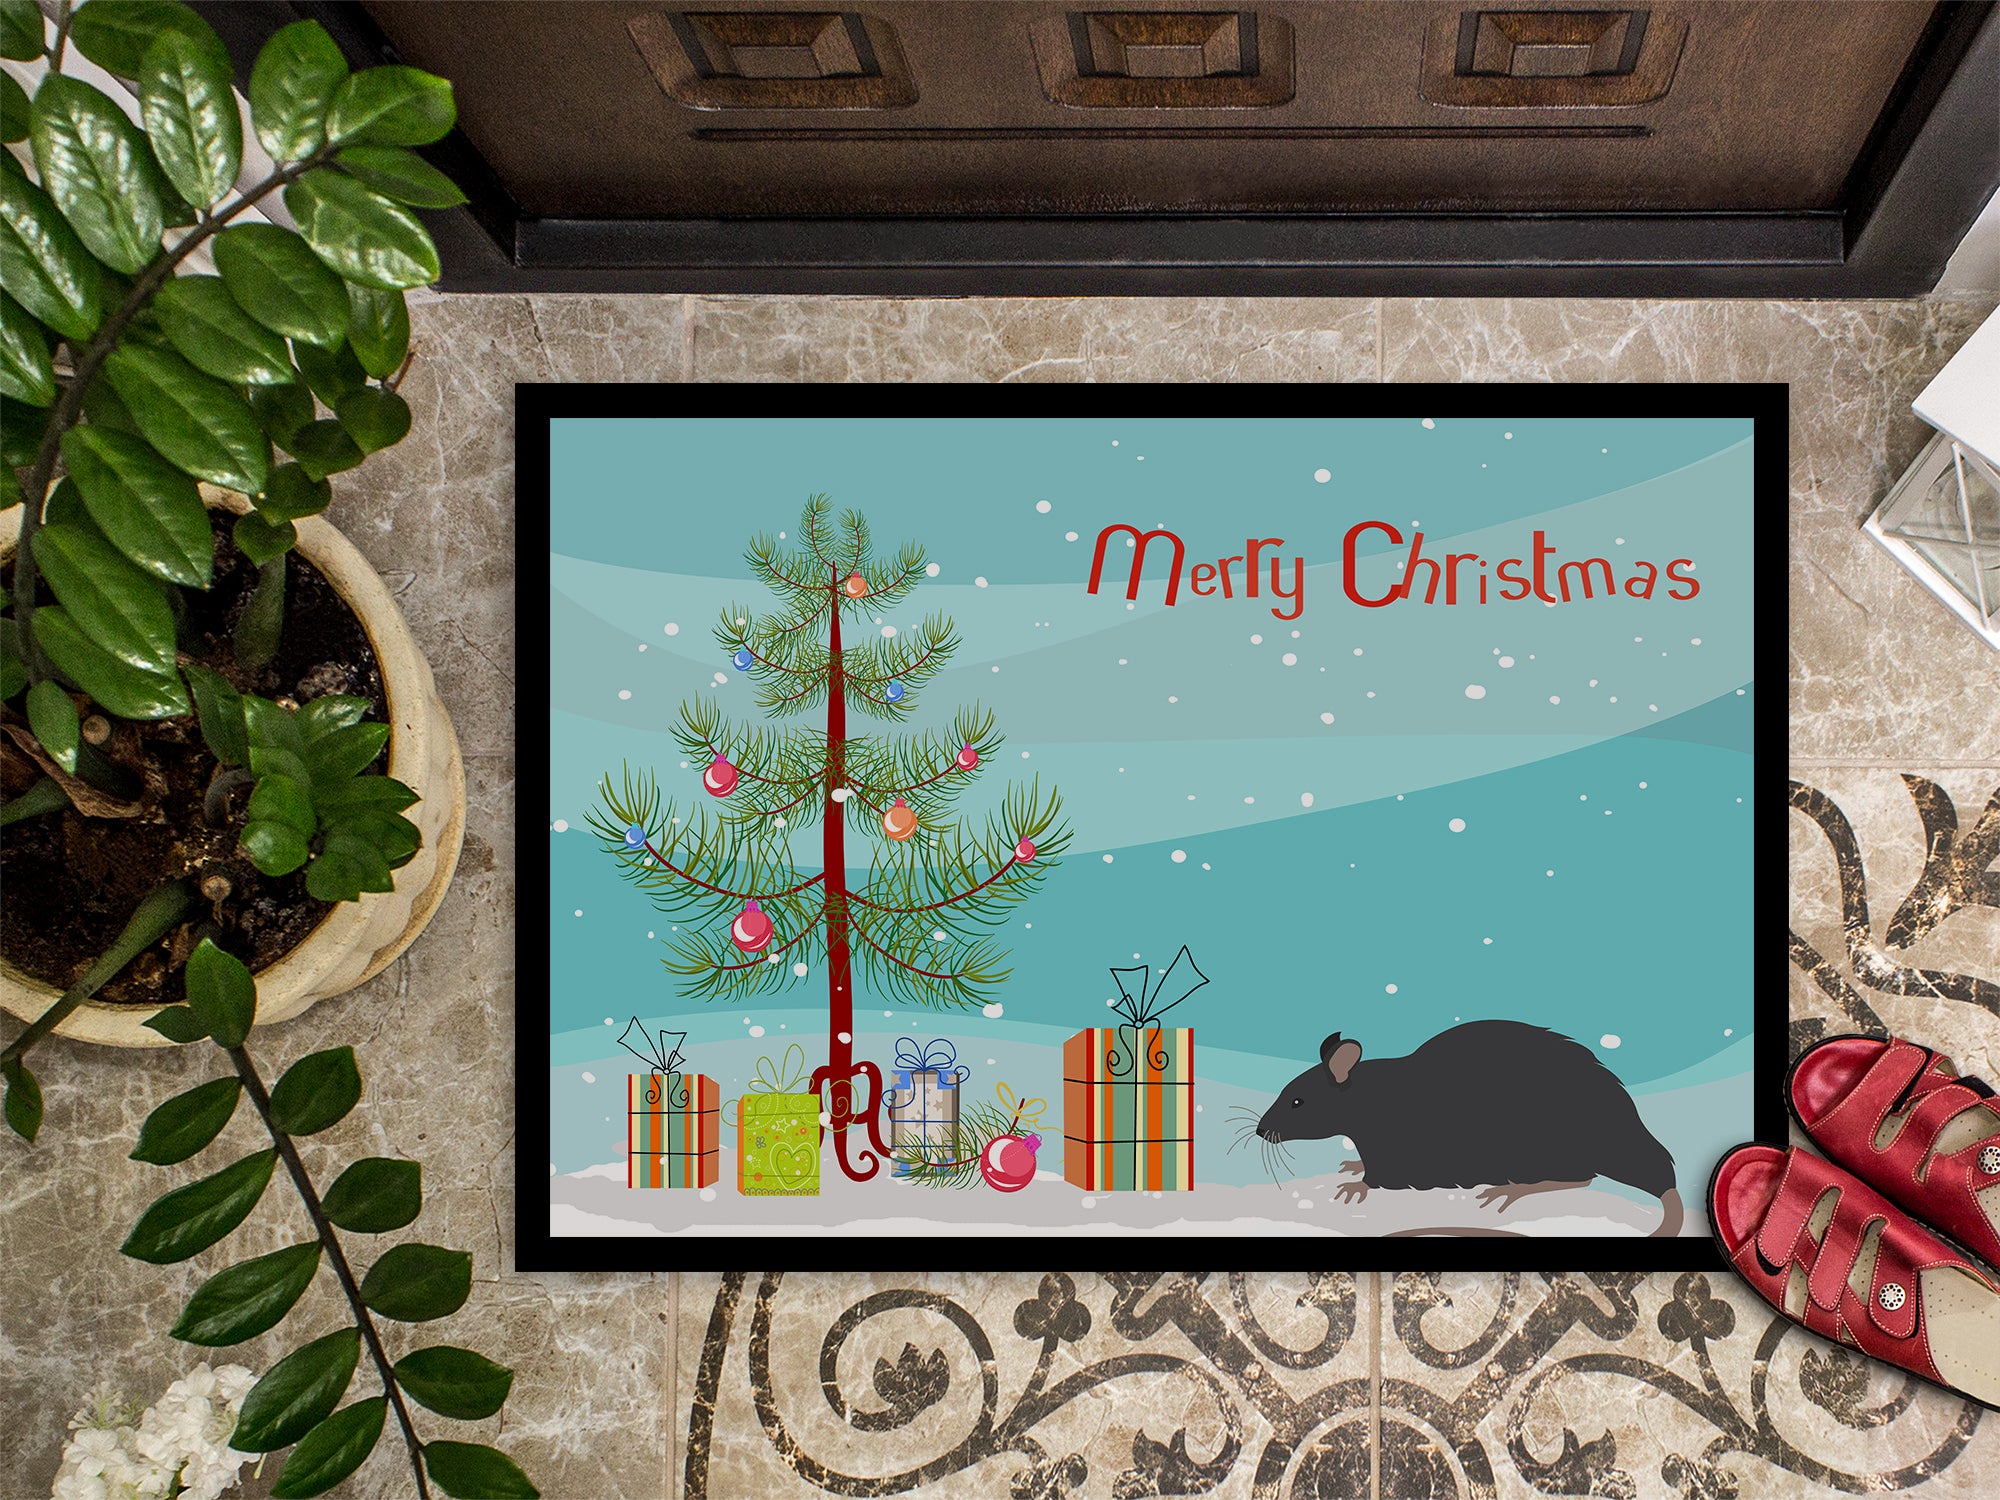 Black Rat Merry Christmas Indoor or Outdoor Mat 18x27 CK4468MAT - the-store.com